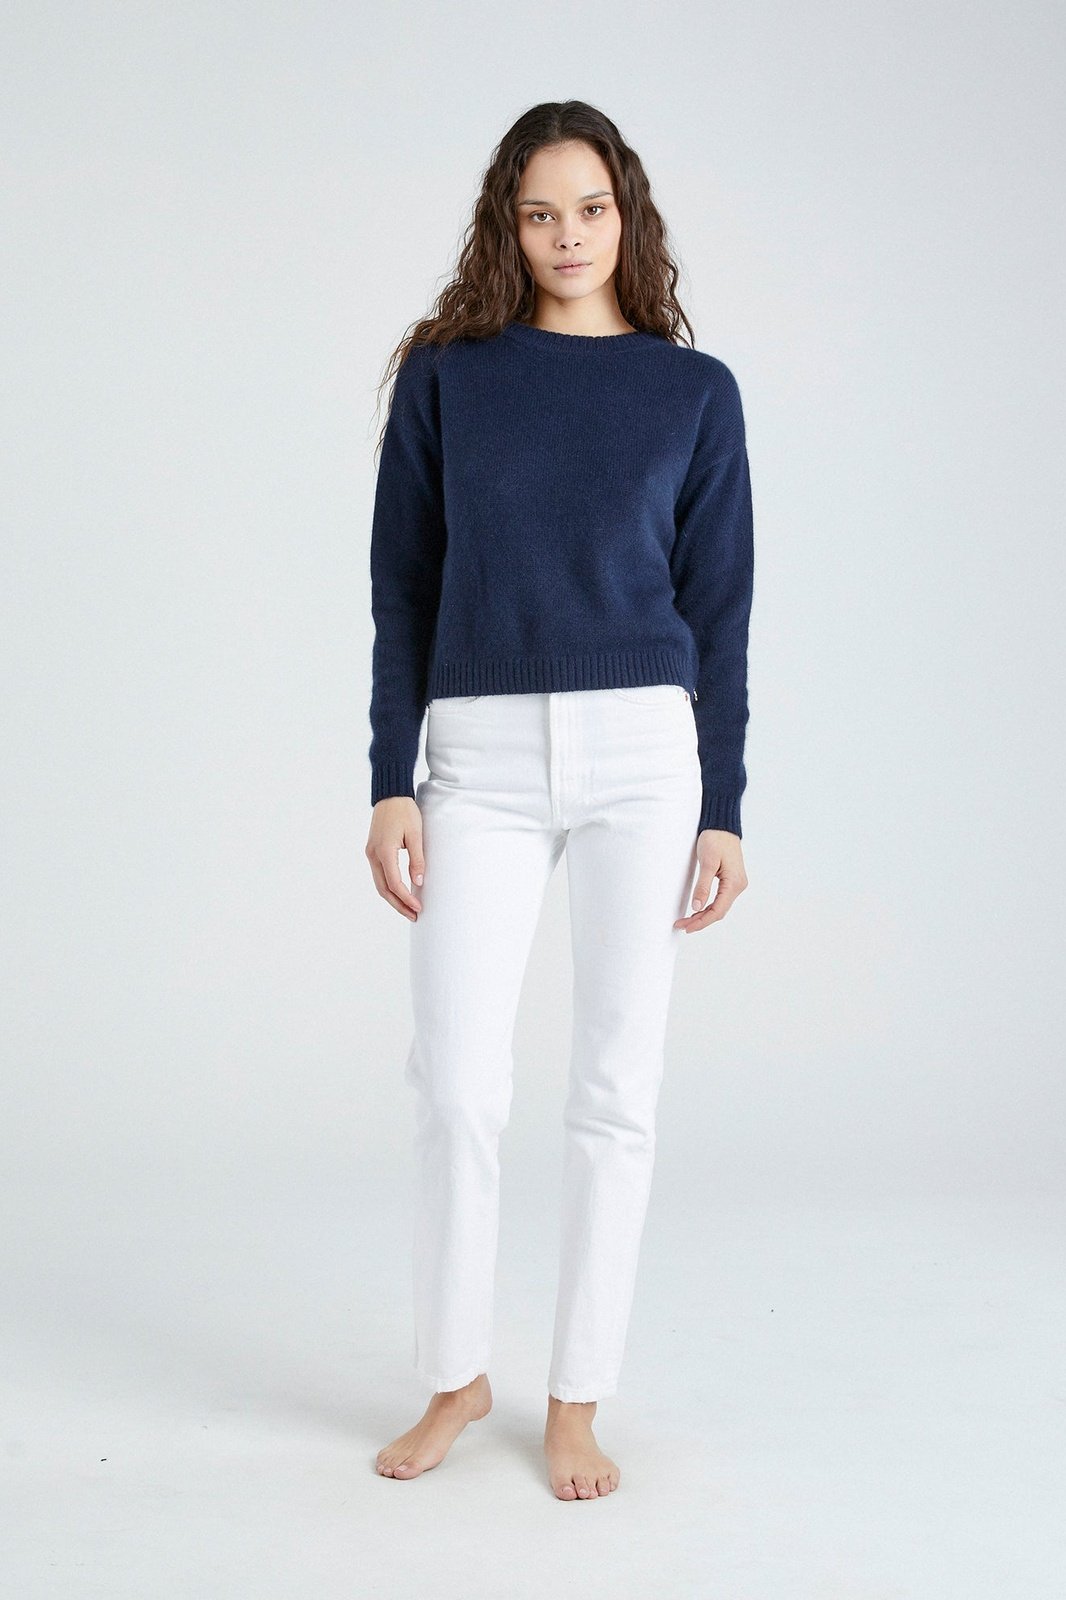 +Beryll Holly Cashmere Sweater | Navy Blue - +Beryll Holly Cashmere Sweater | Navy Blue - +Beryll Worn By Good People